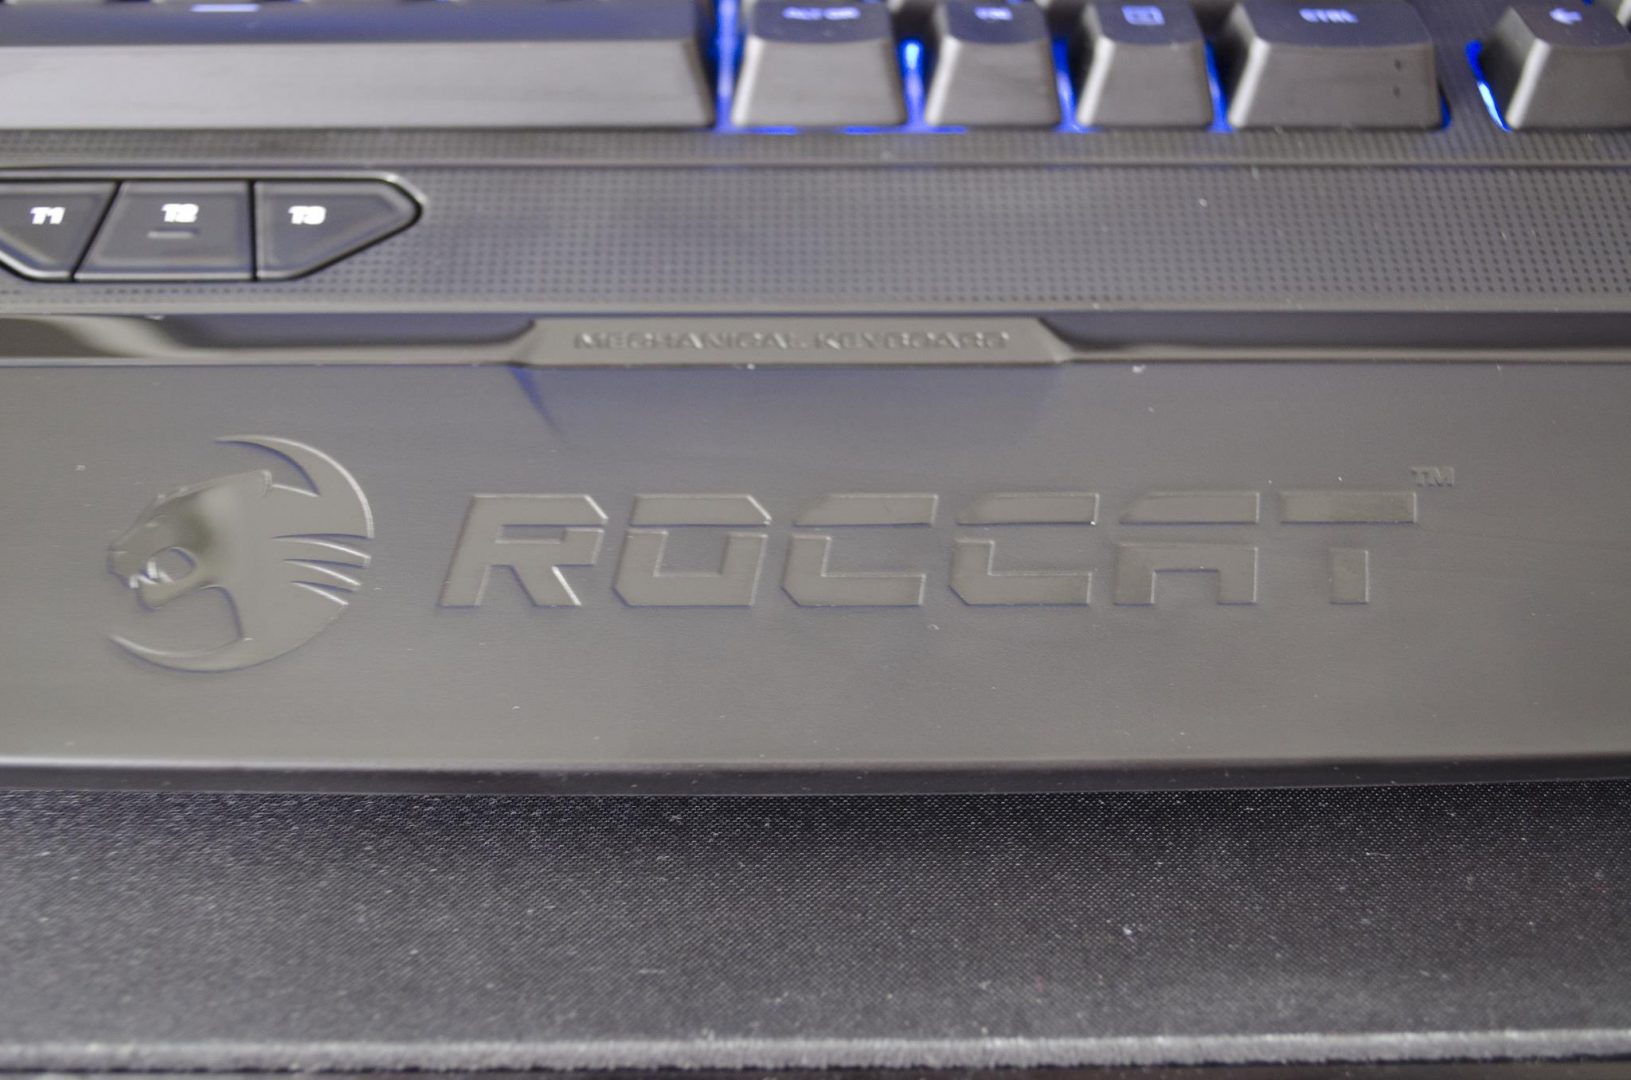 ROCCAT Ryos MK FX Mechanical Keyboard Review